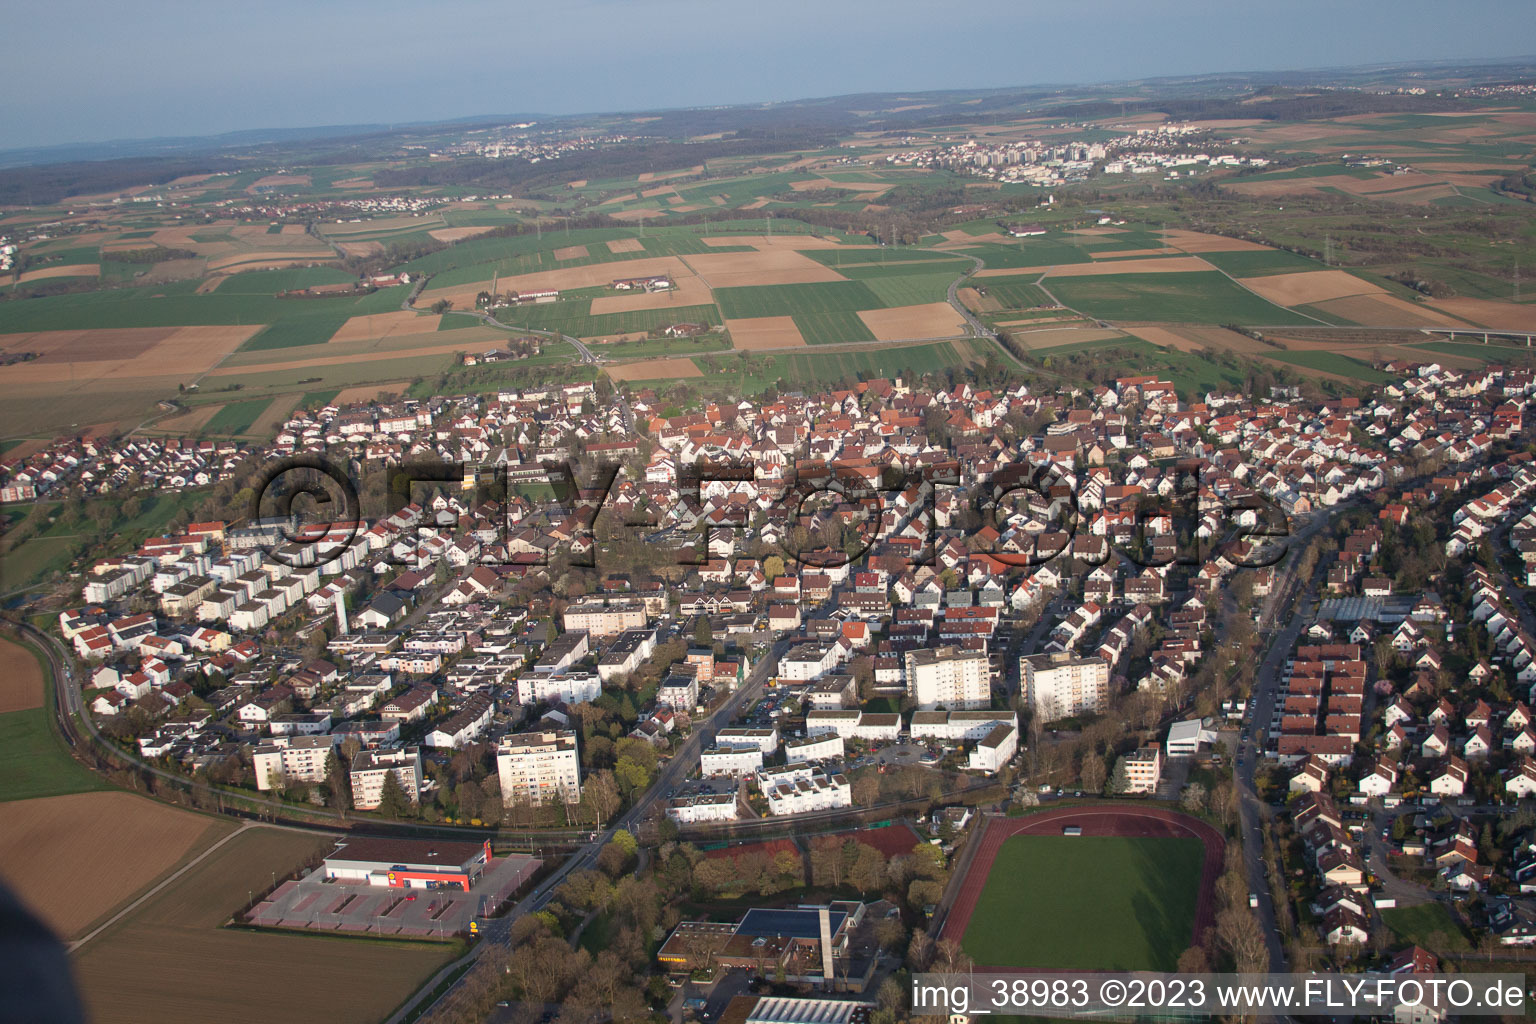 District Münchingen in Korntal-Münchingen in the state Baden-Wuerttemberg, Germany from above